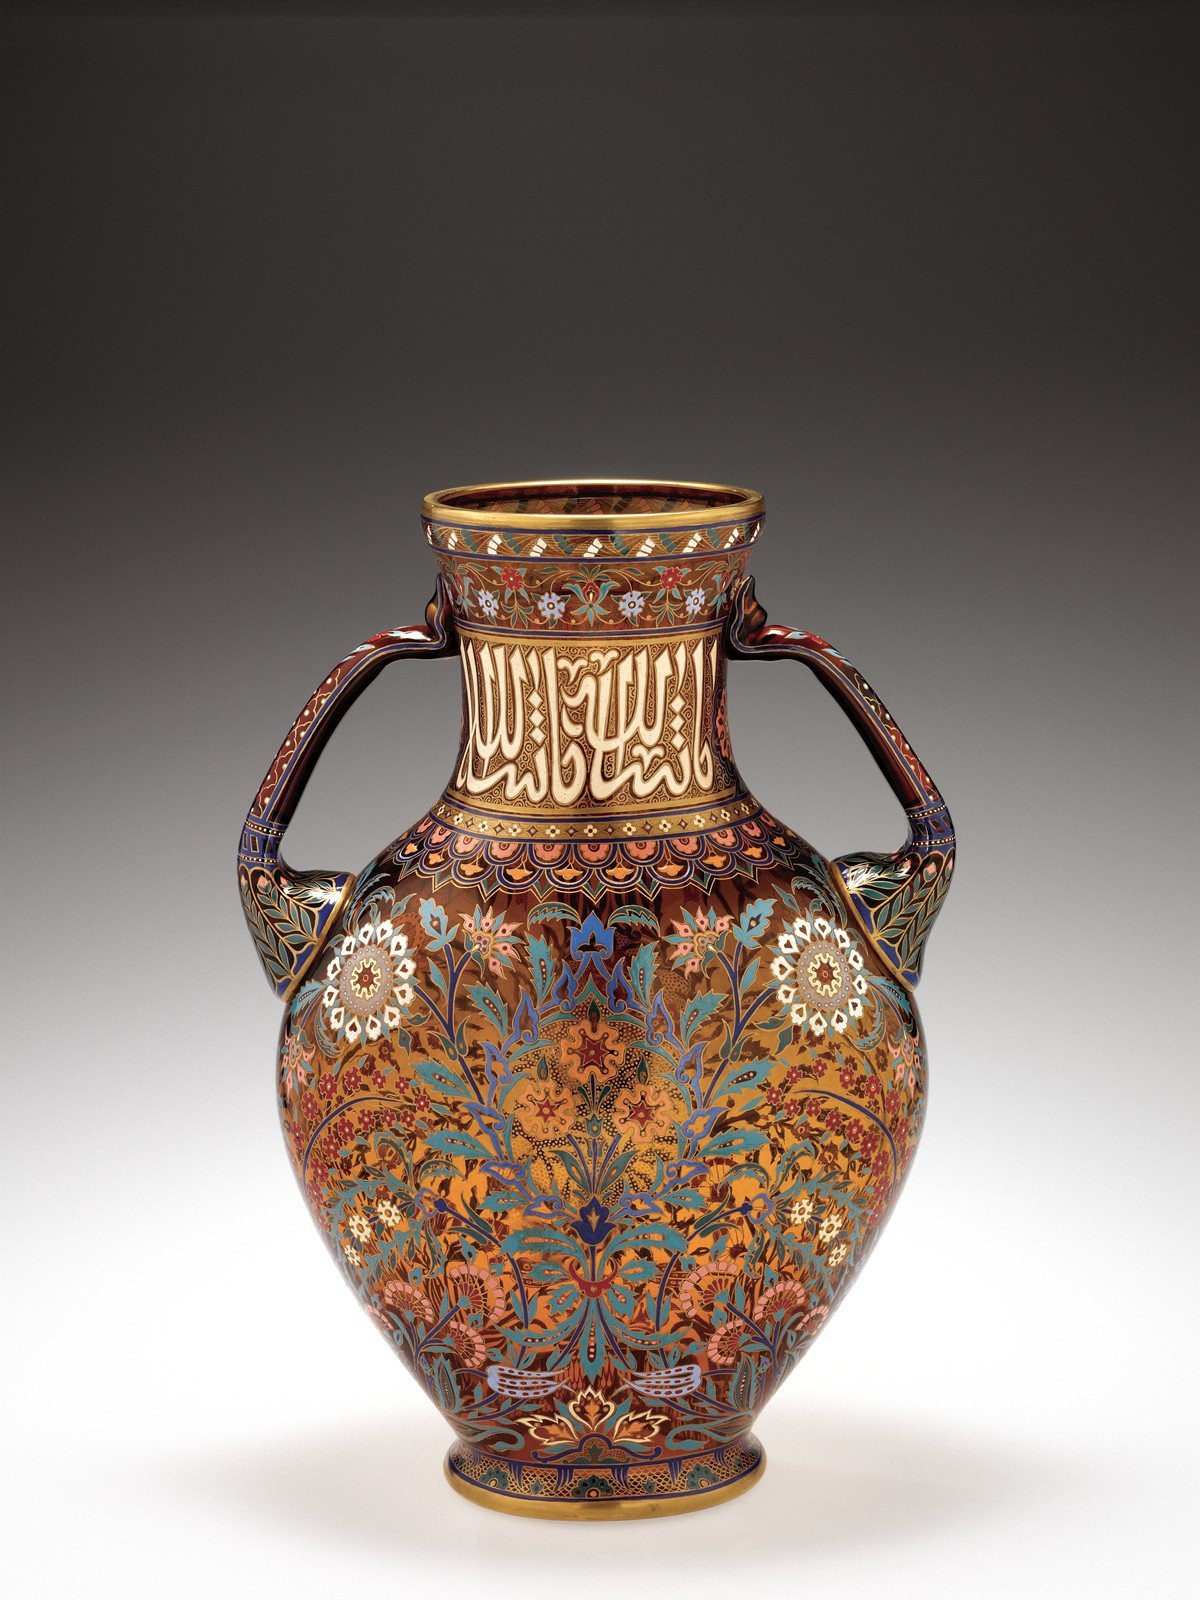 21 Wonderful White Ceramic Pitcher Vase 2024 free download white ceramic pitcher vase of collection search corning museum of glass in persian series